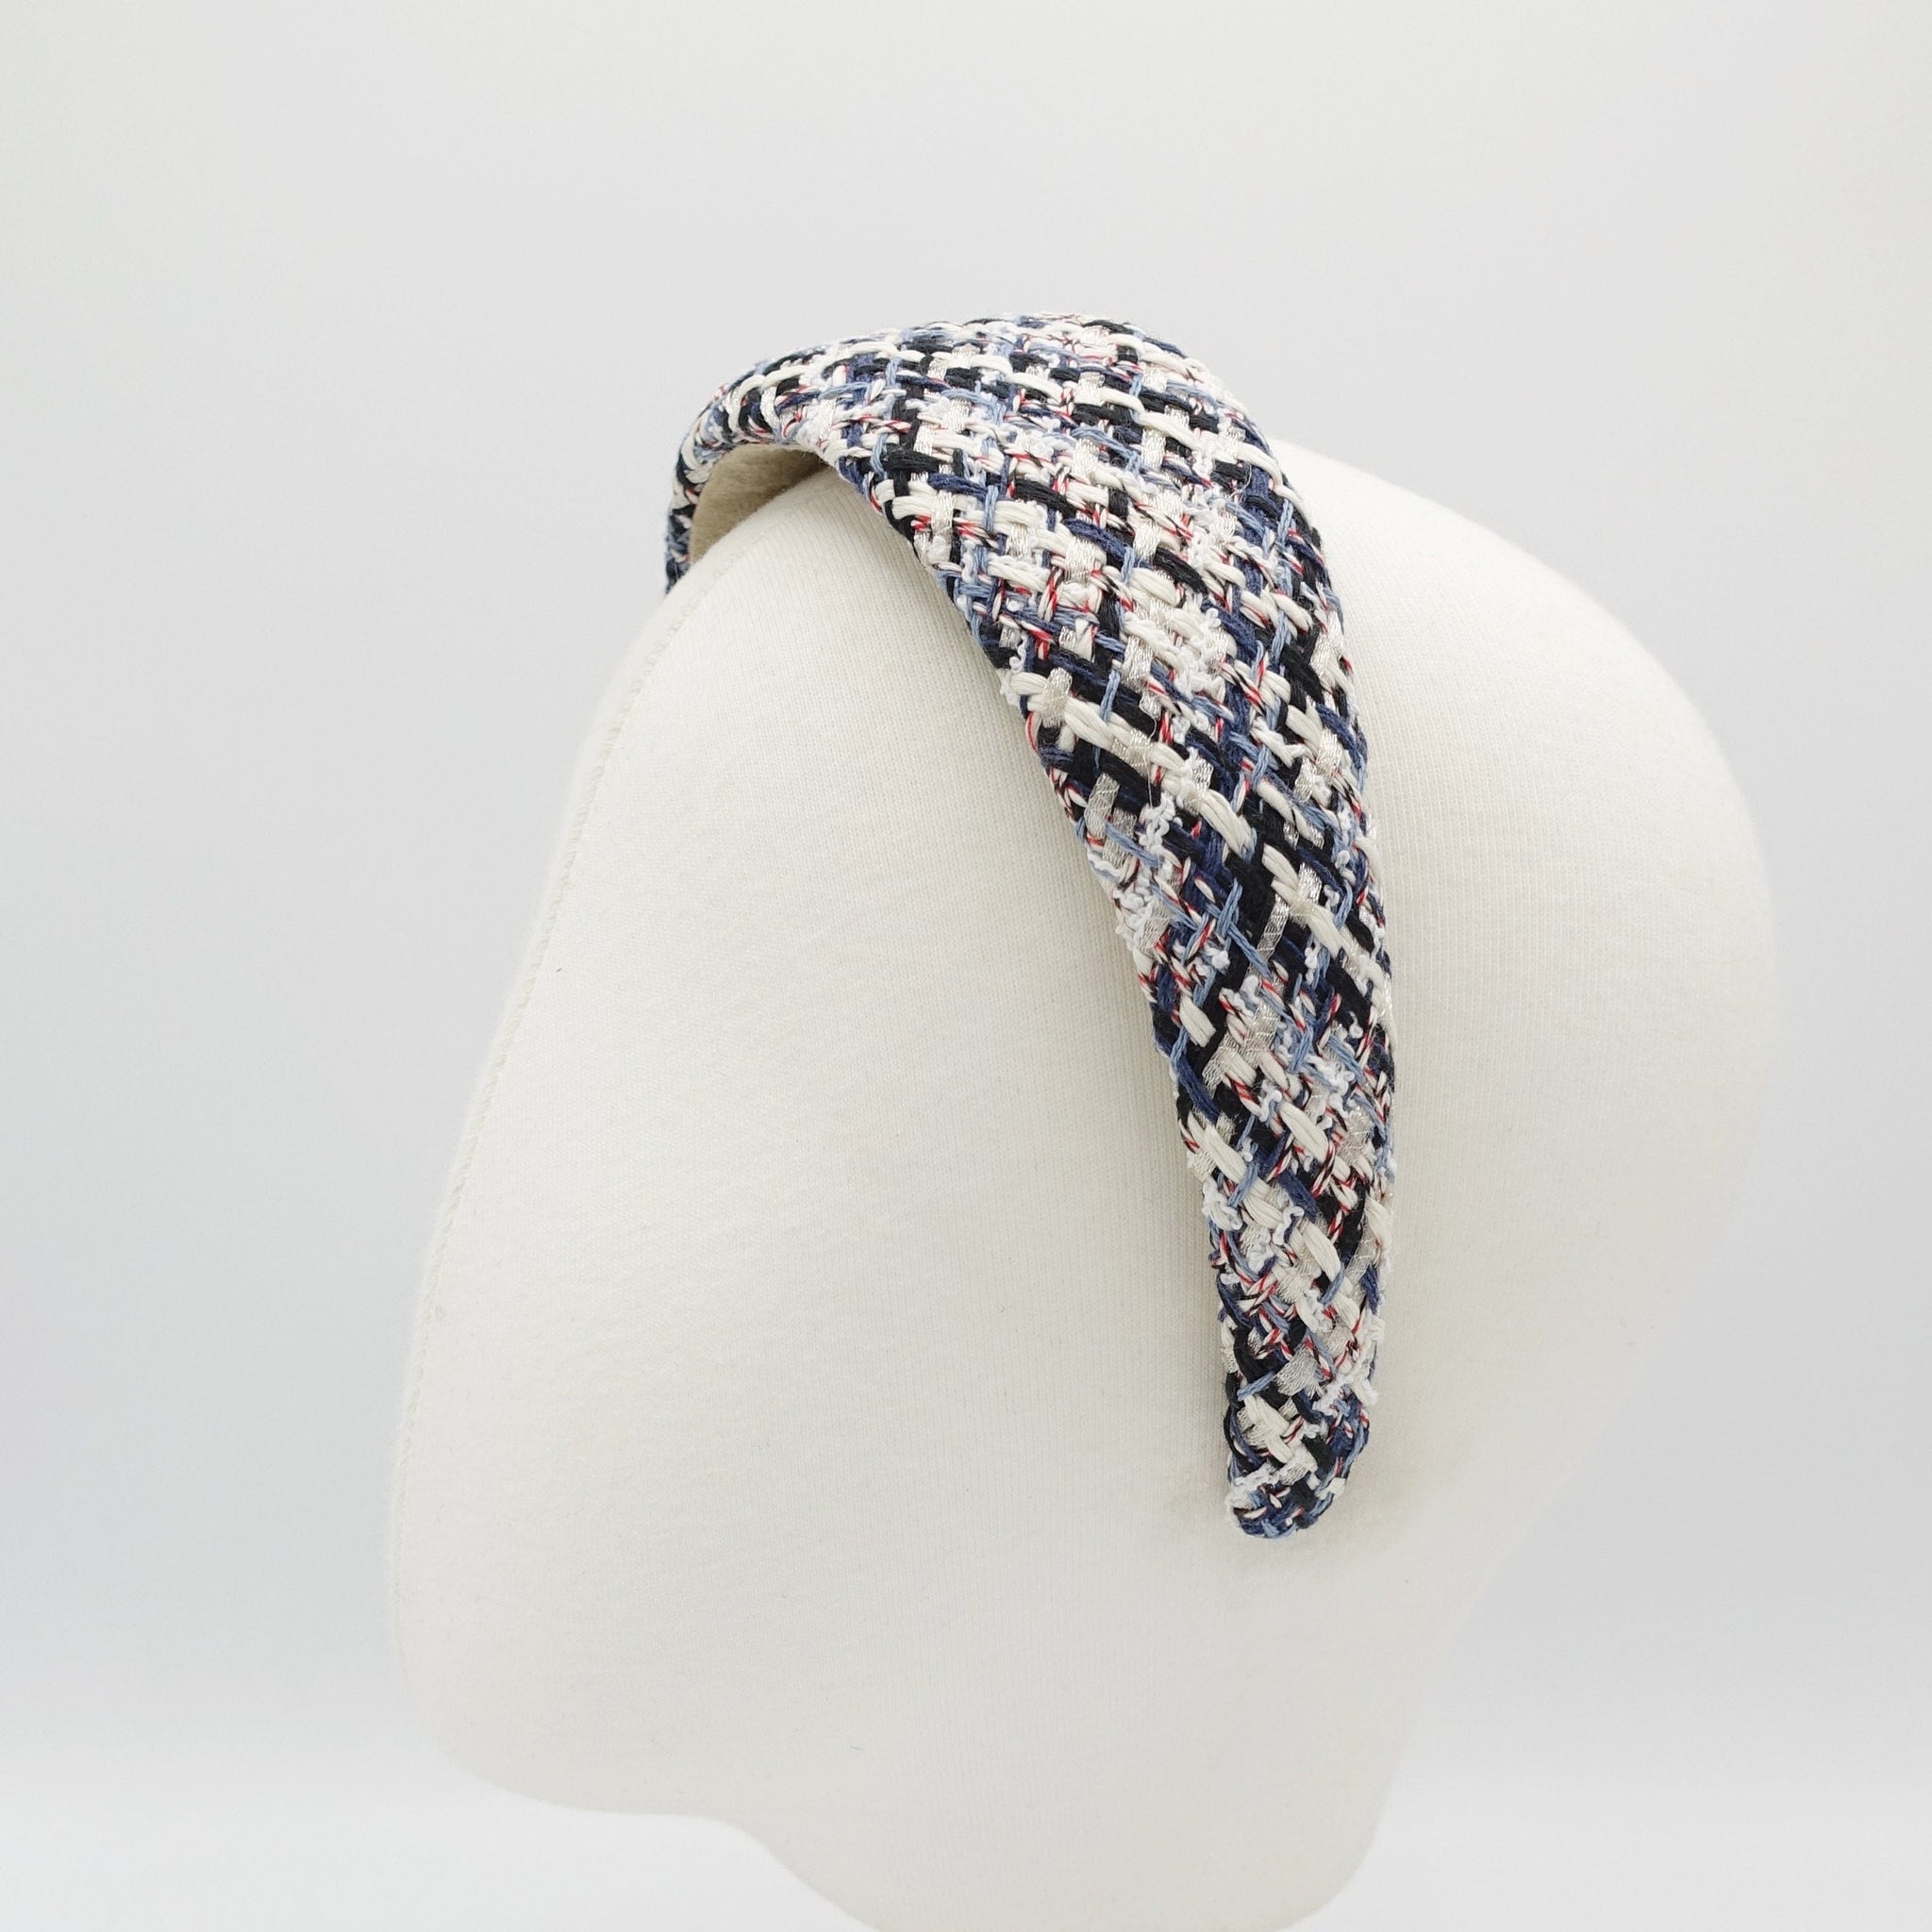 veryshine.com tweed wide headband Autumn Winter hairband for women